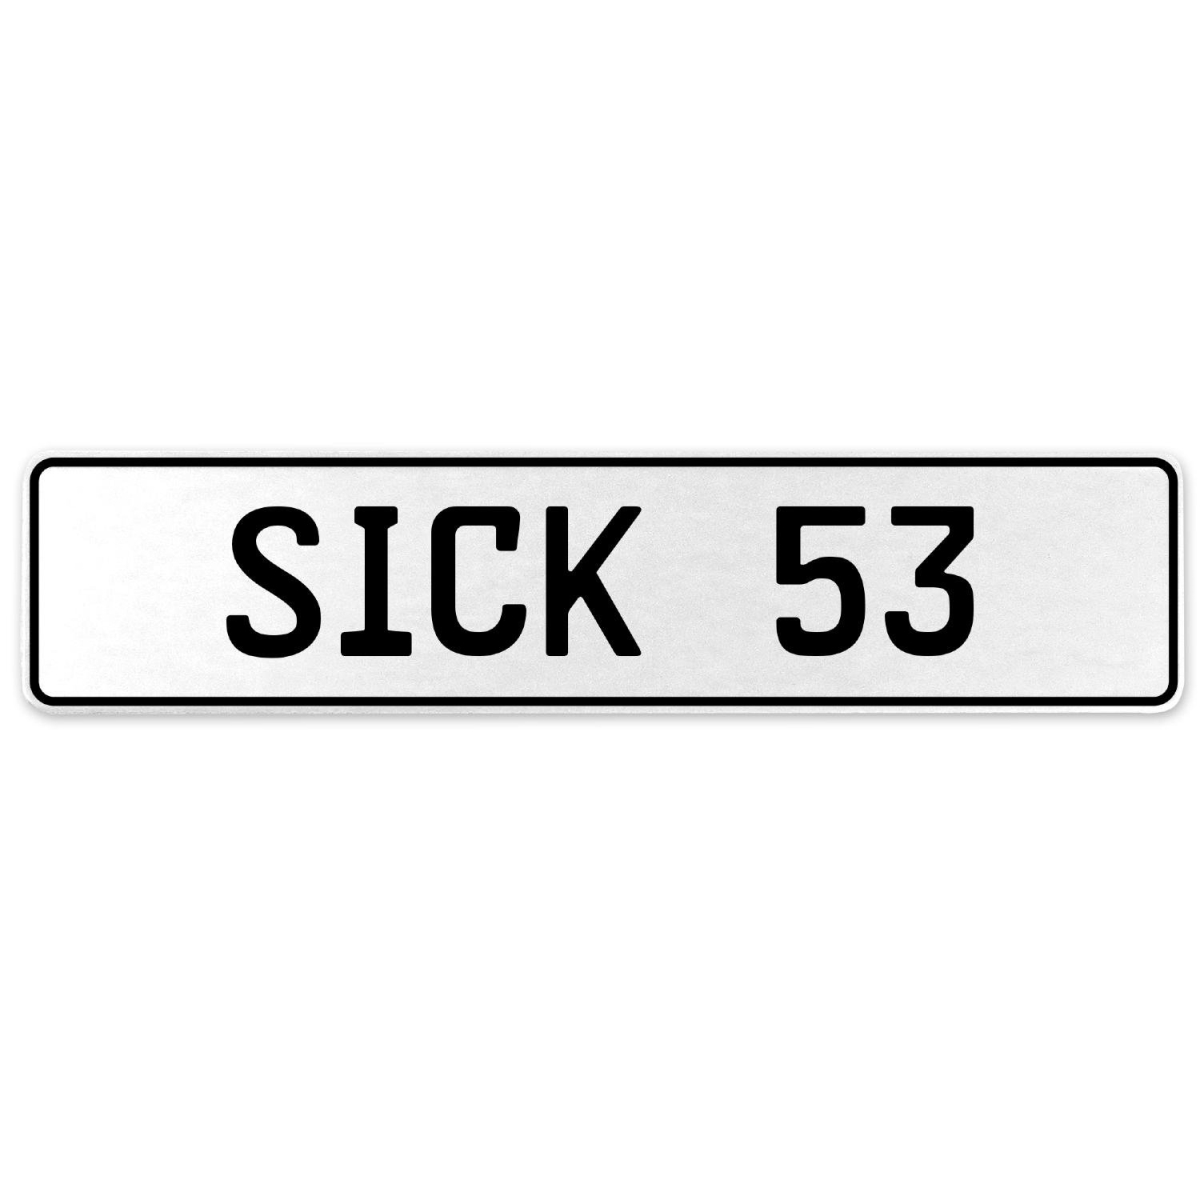 554353 Sick 53 - White Aluminum Street Sign Mancave Euro Plate Name Door Sign Wall